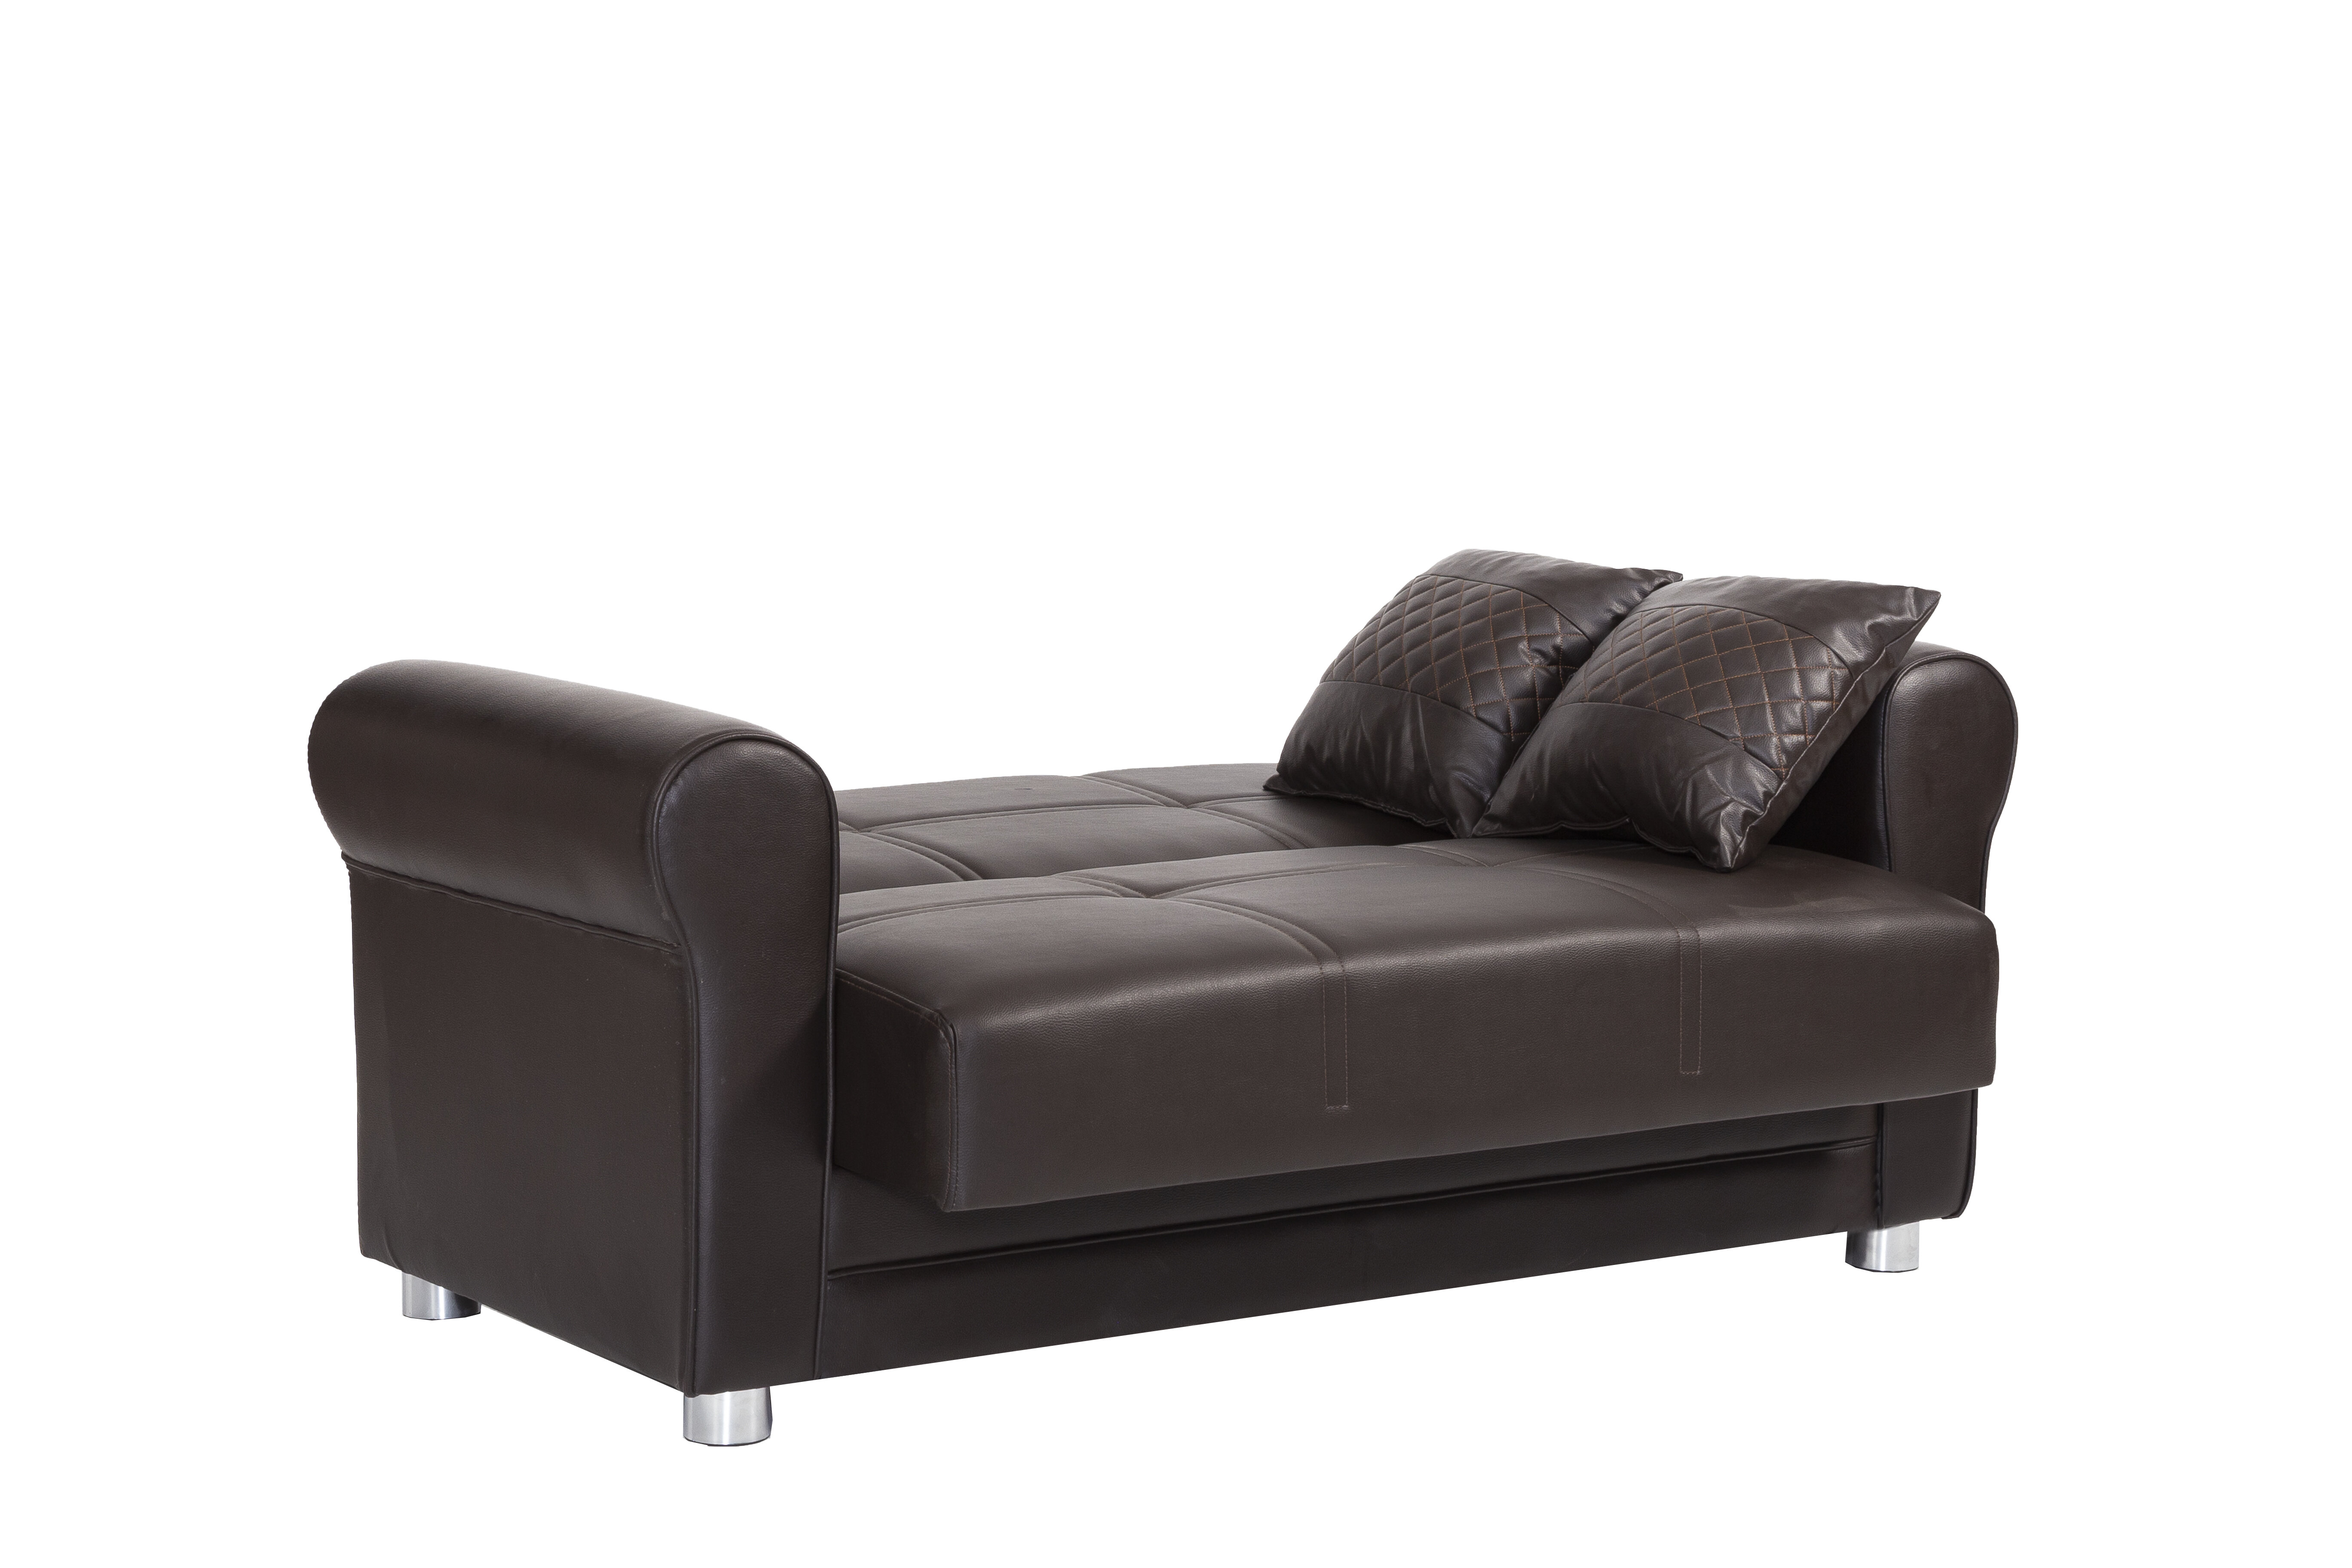 ottomanson avalon sleeper sofa bed with storage